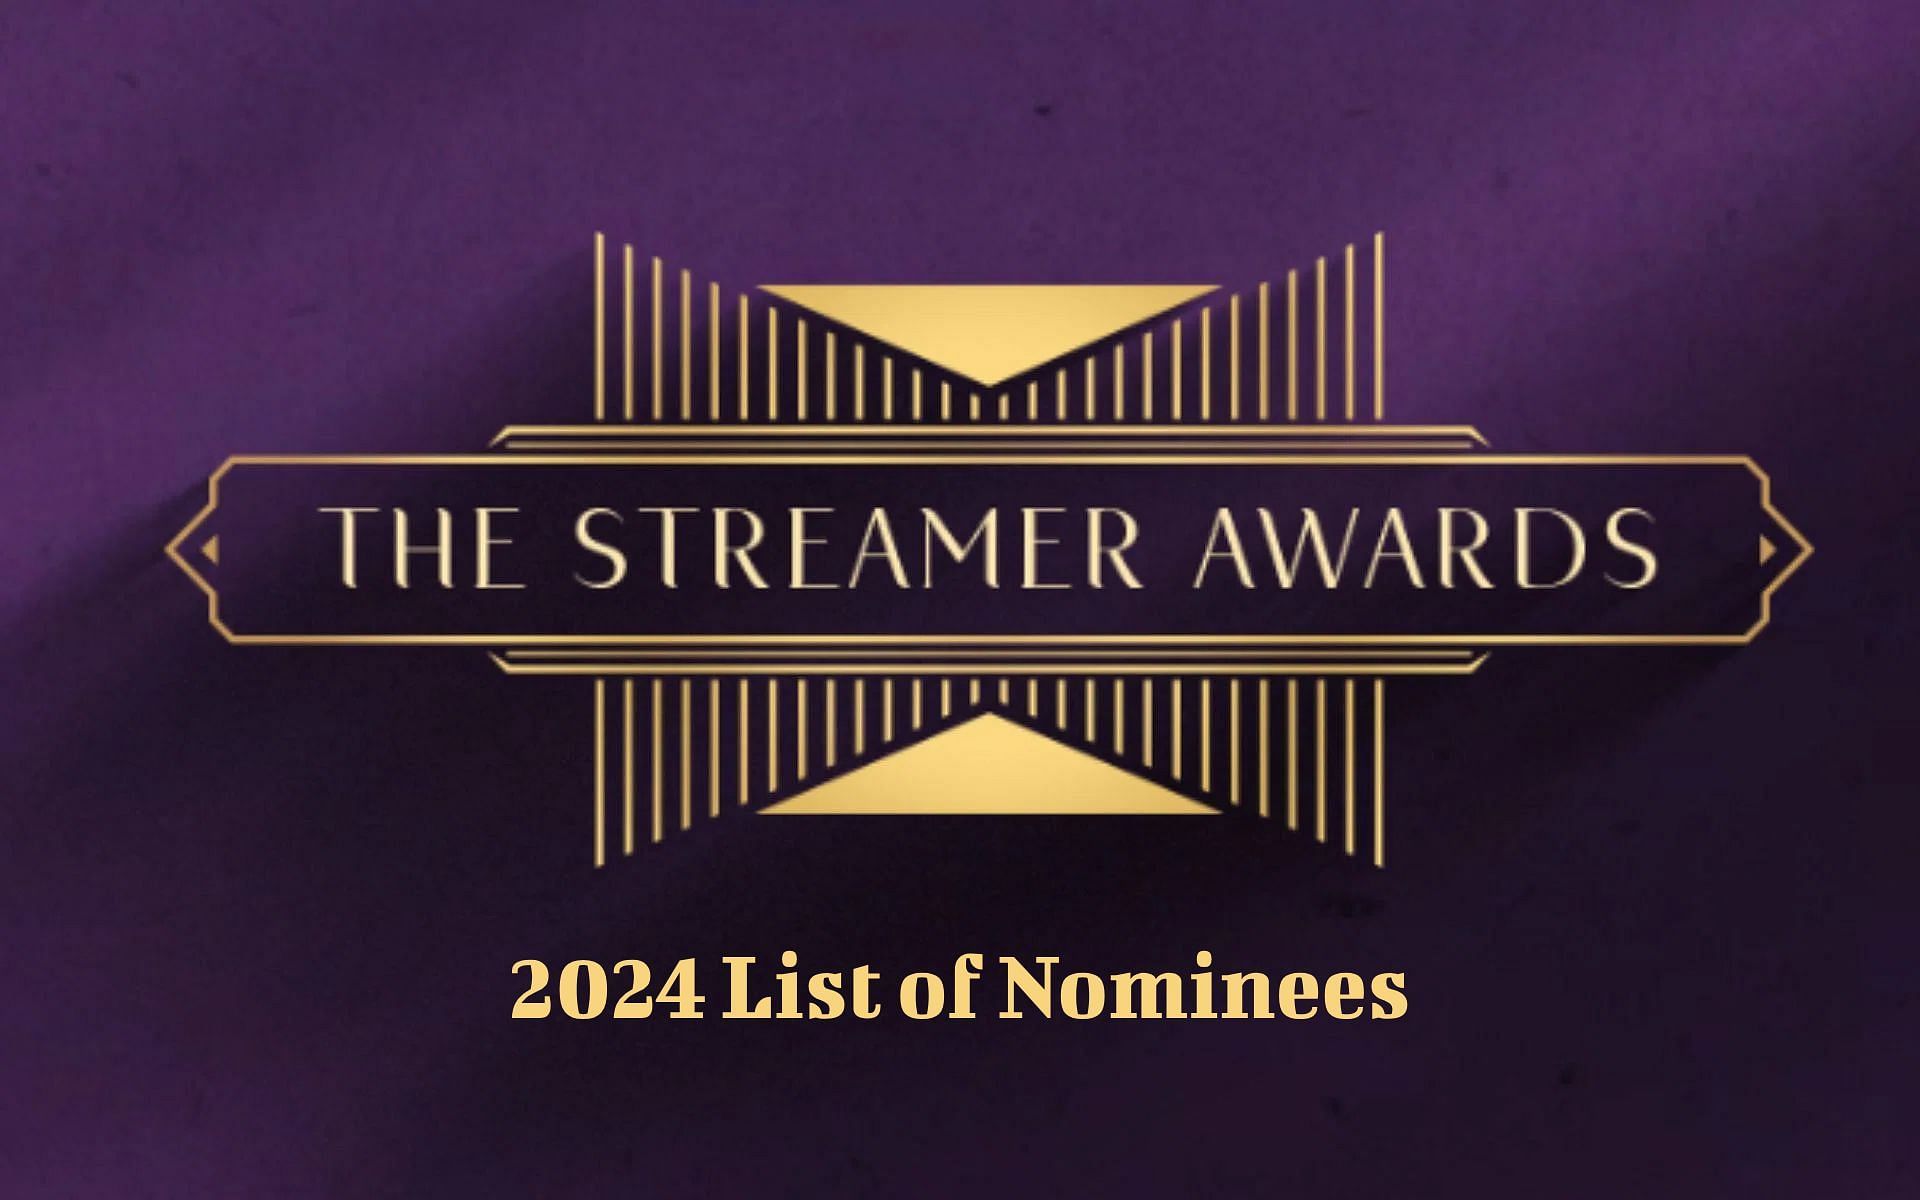 Full list of nominations for 2024 Streamer Awards (Image via thestreamerawards.com)